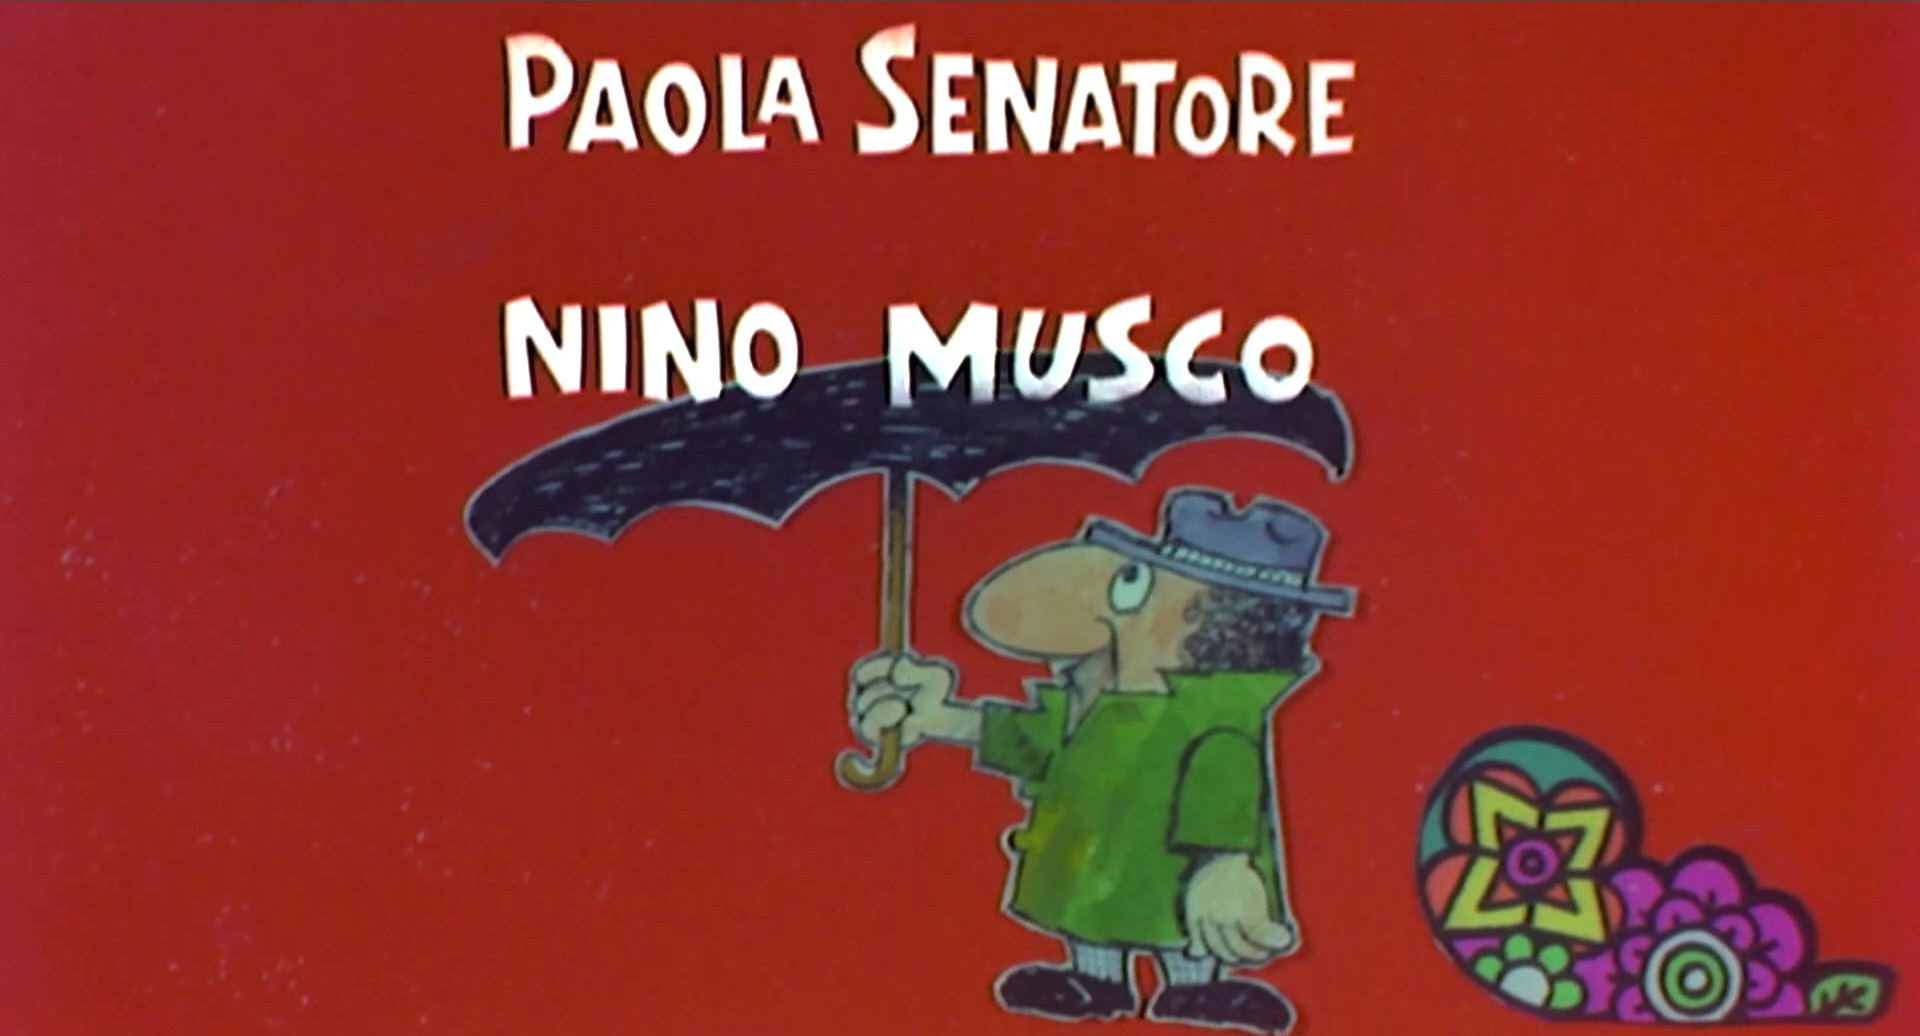 Lionel - Nino Musco3.jpg